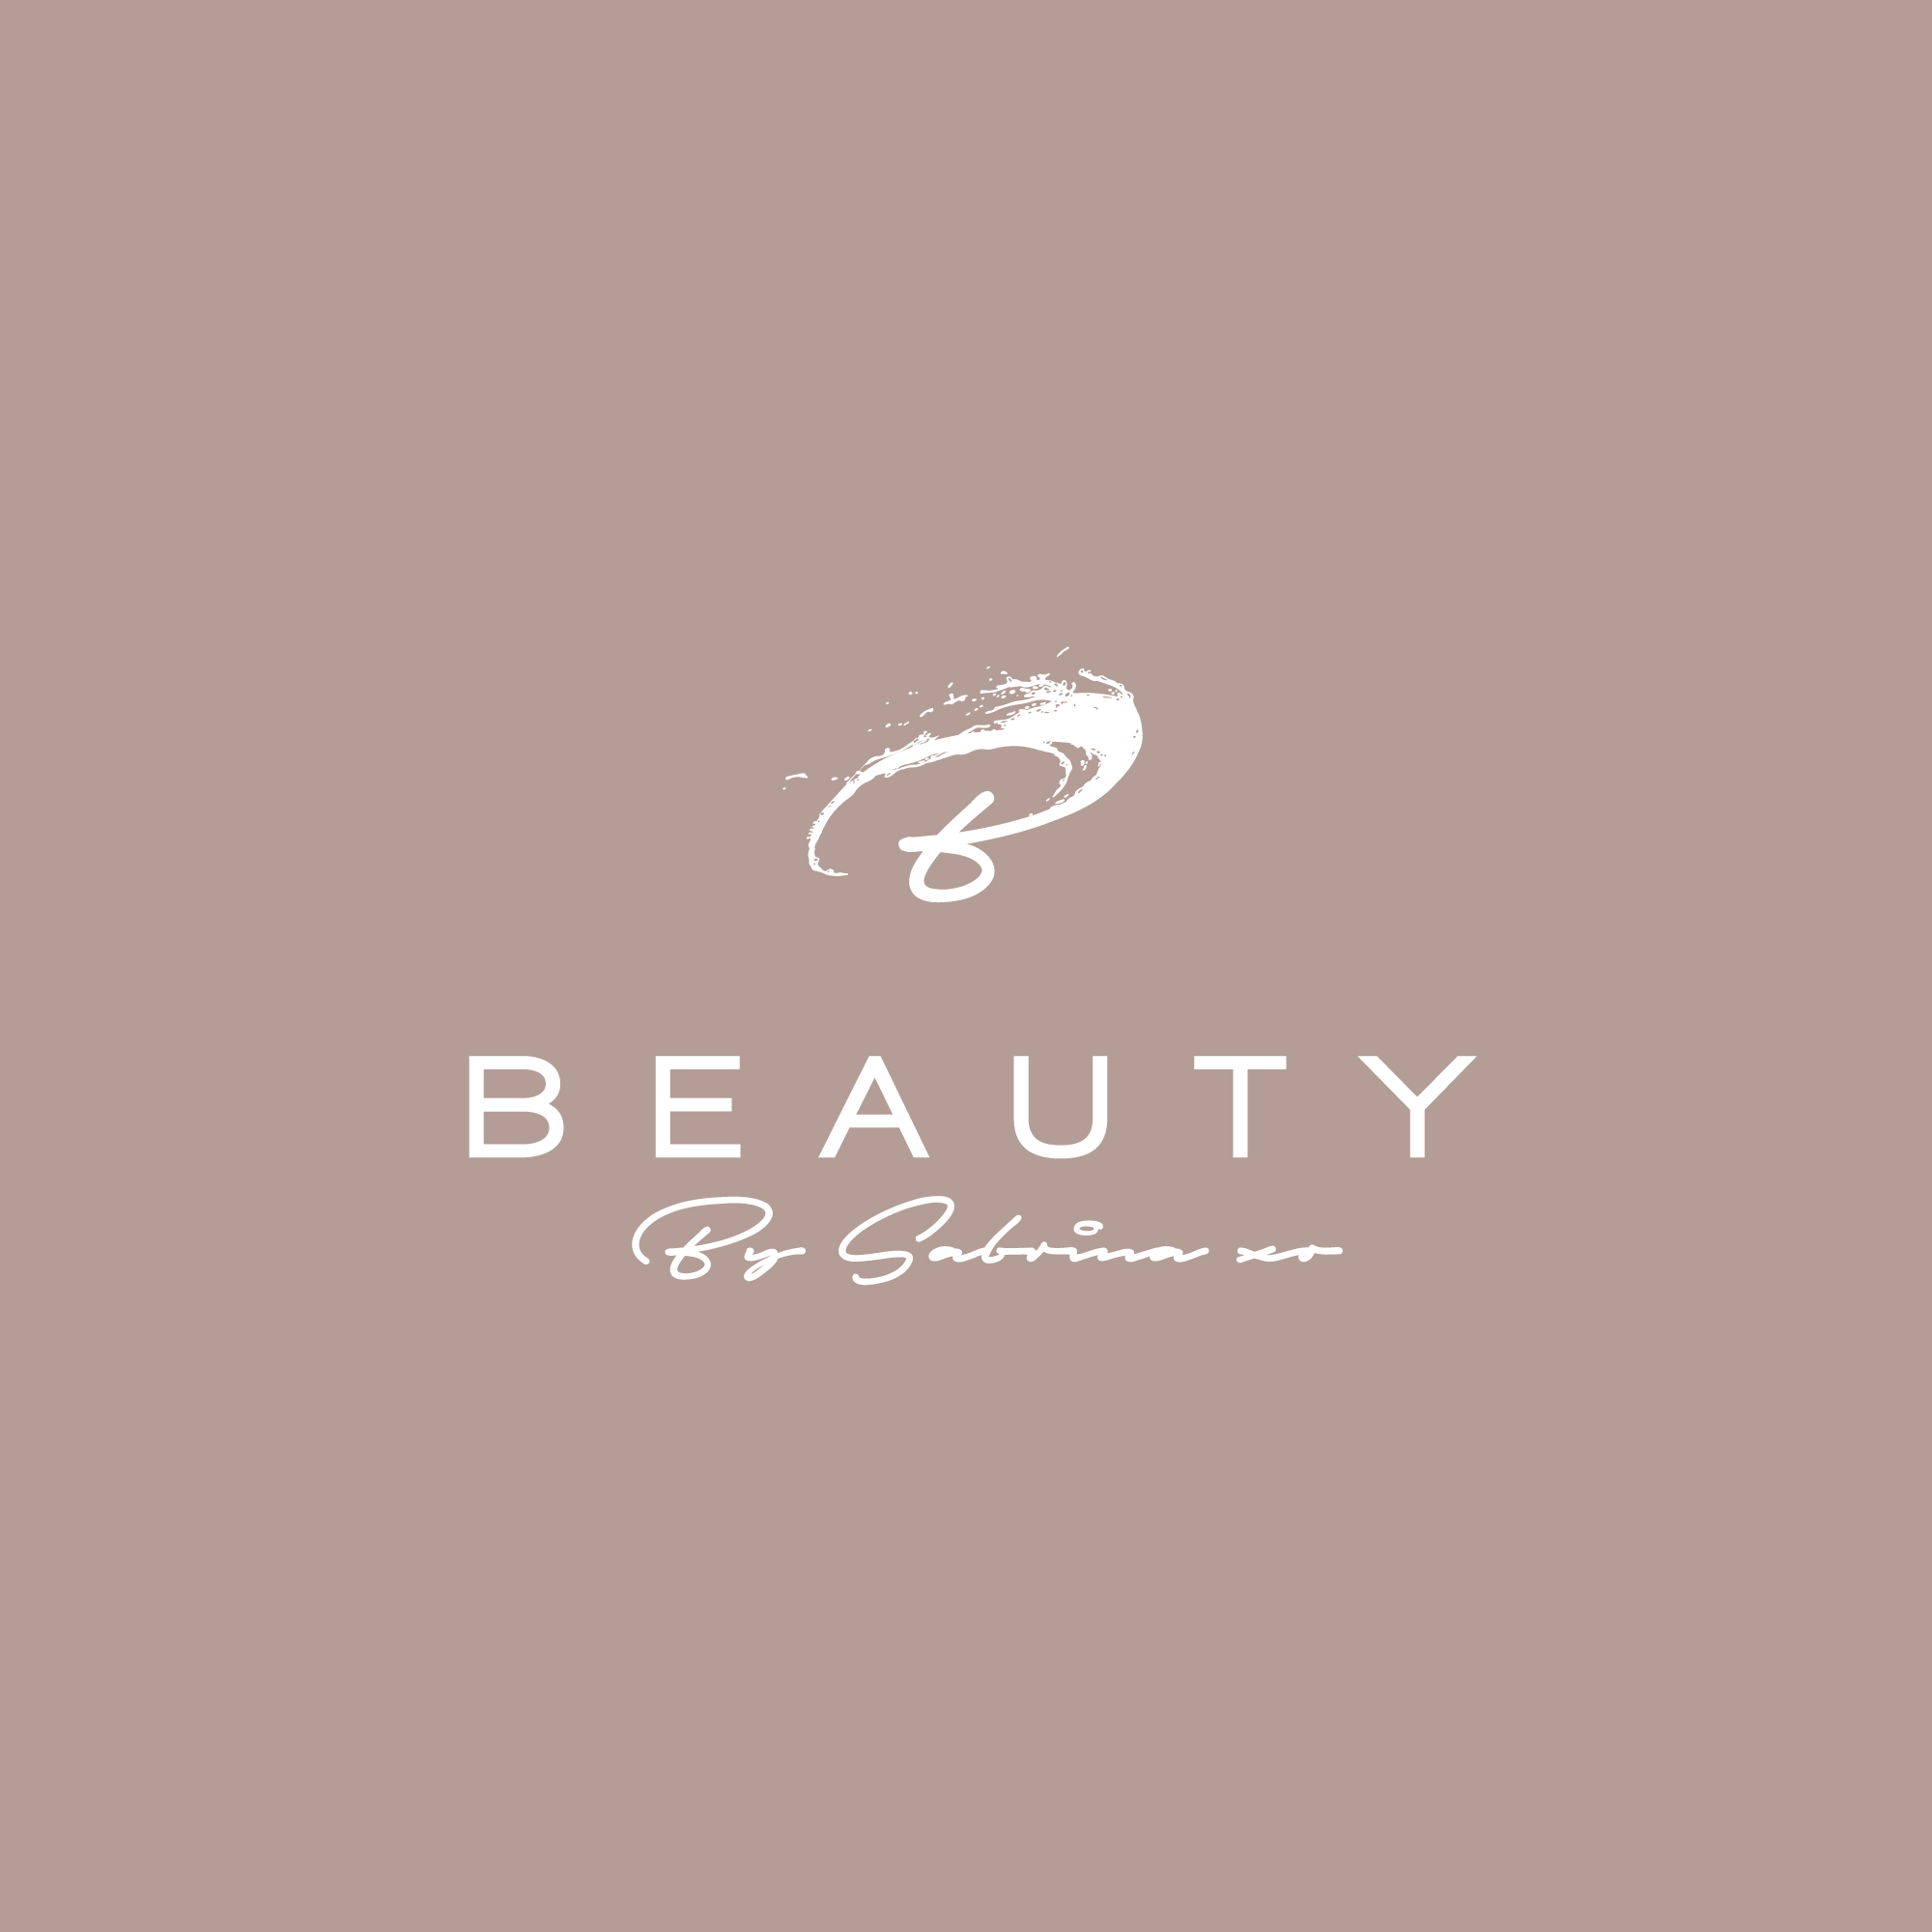 BeautybySab